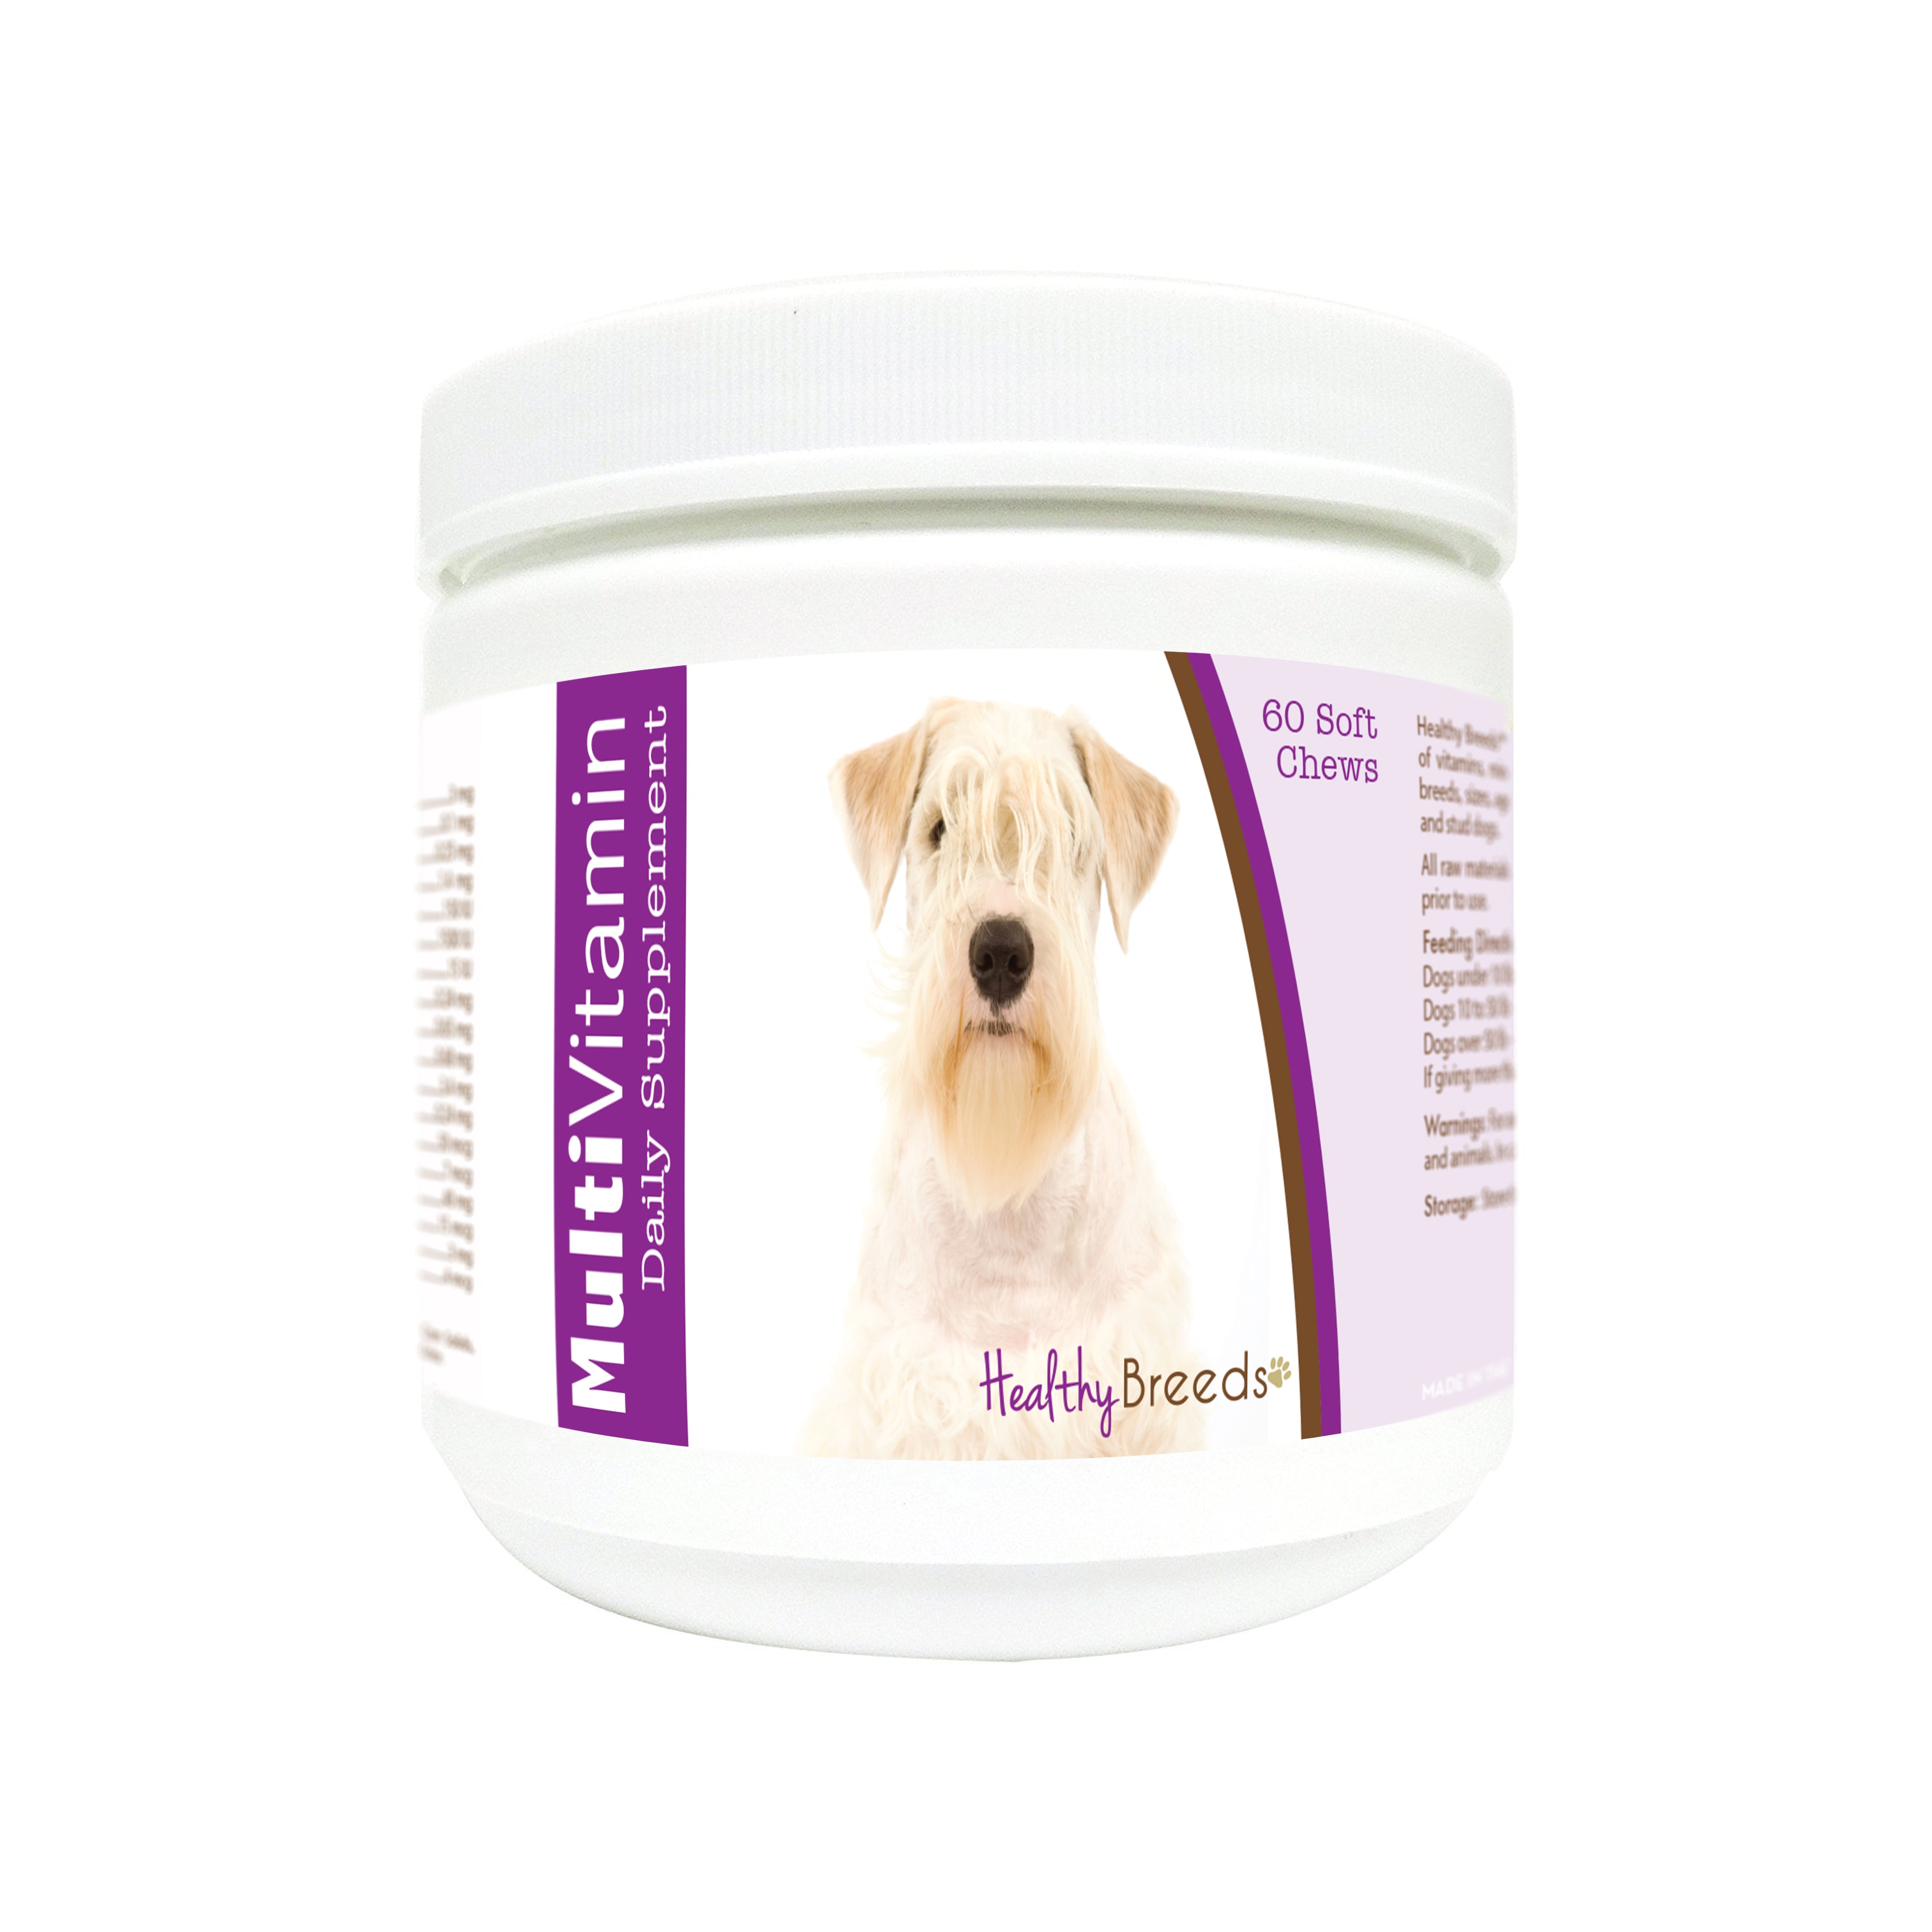 Sealyham Terrier Multi-Vitamin Soft Chews 60 Count